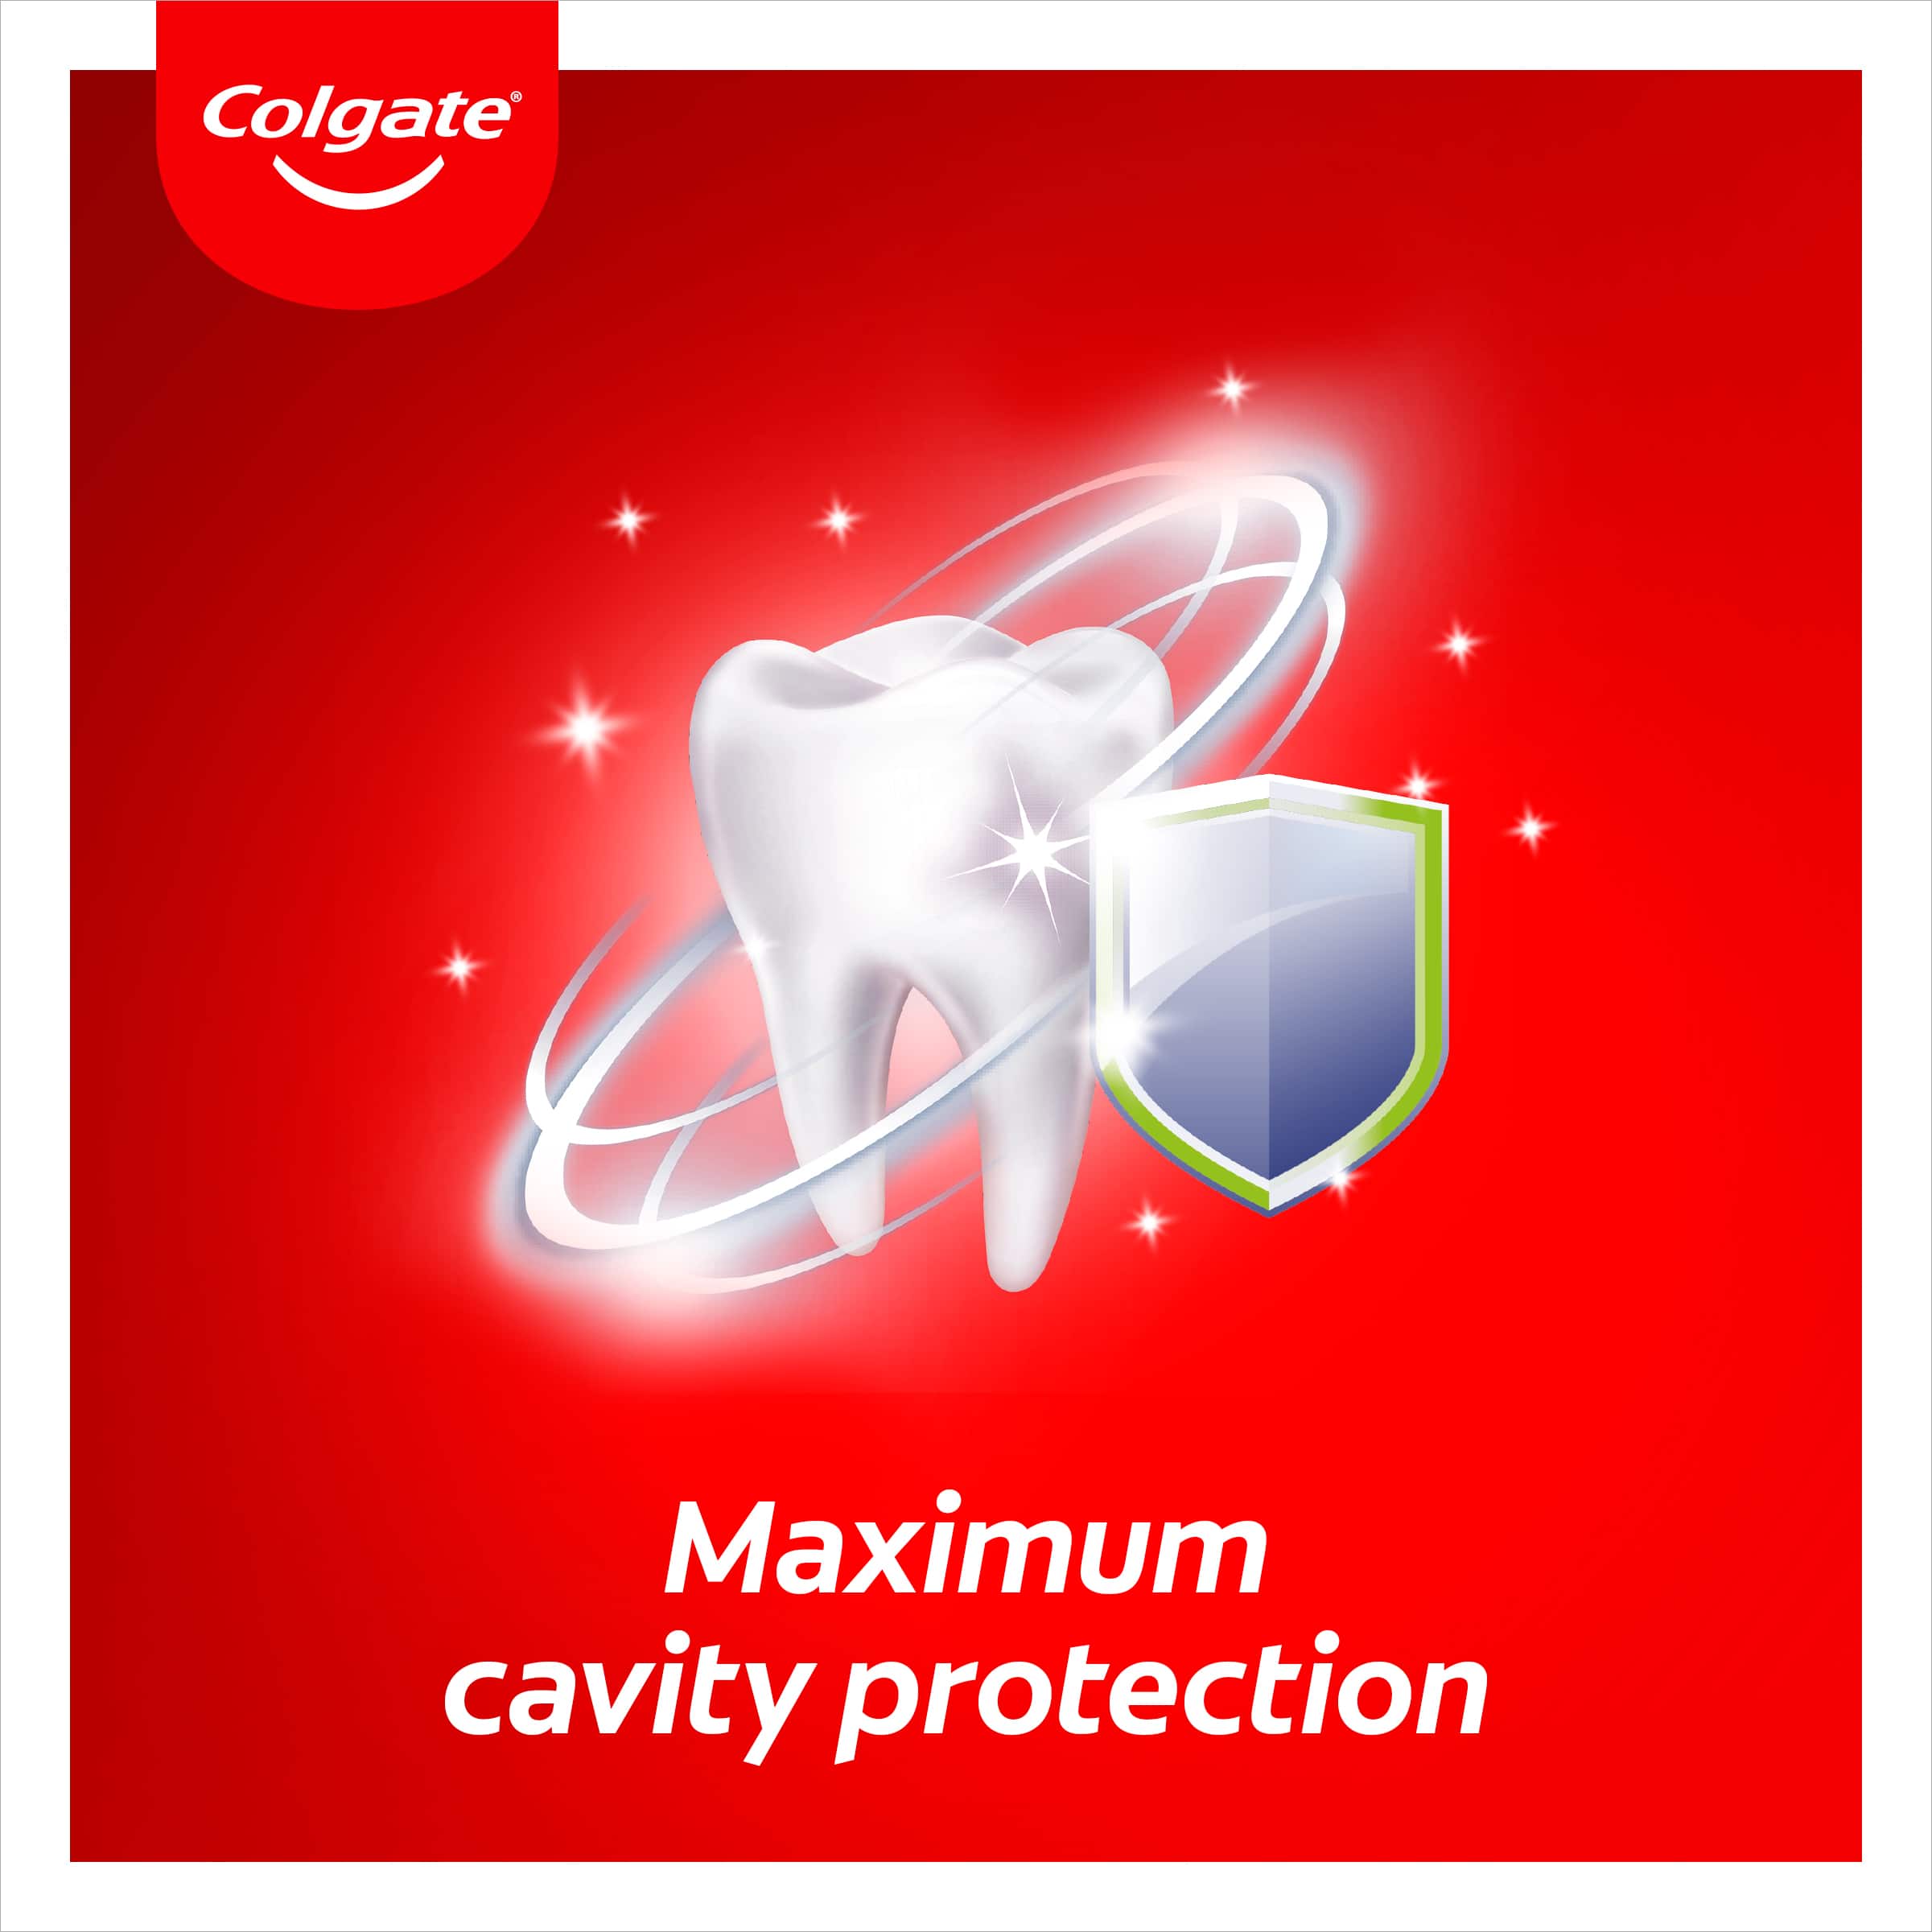 maximum cavity protection